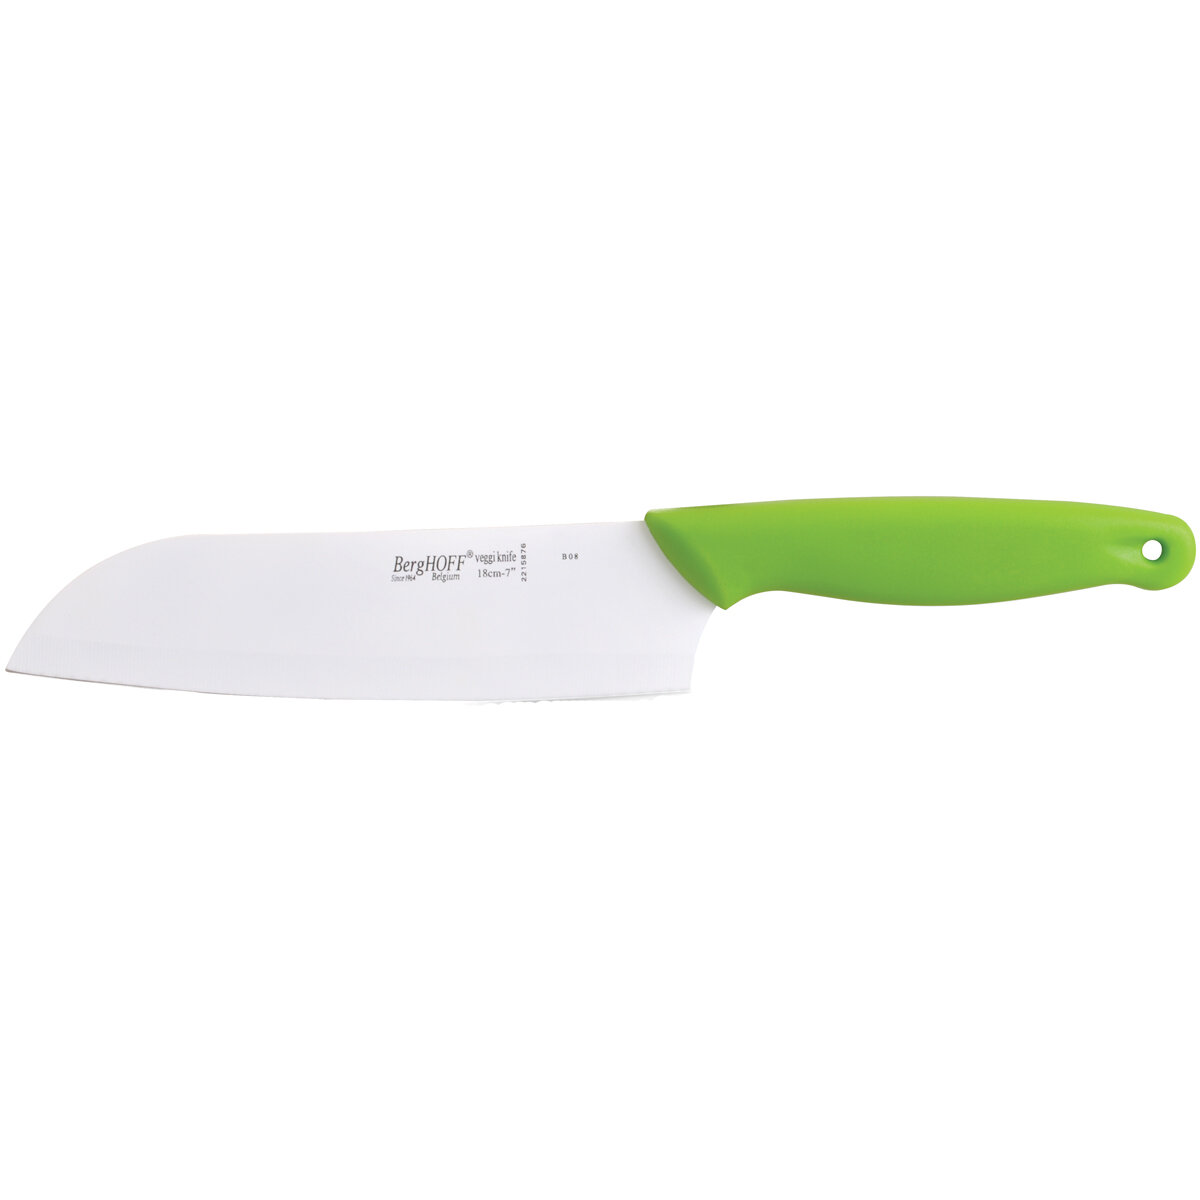 wipe out Regularity Suppress BergHOFF International 7" Ceramic Coated Vegetable Knife & Reviews | Wayfair